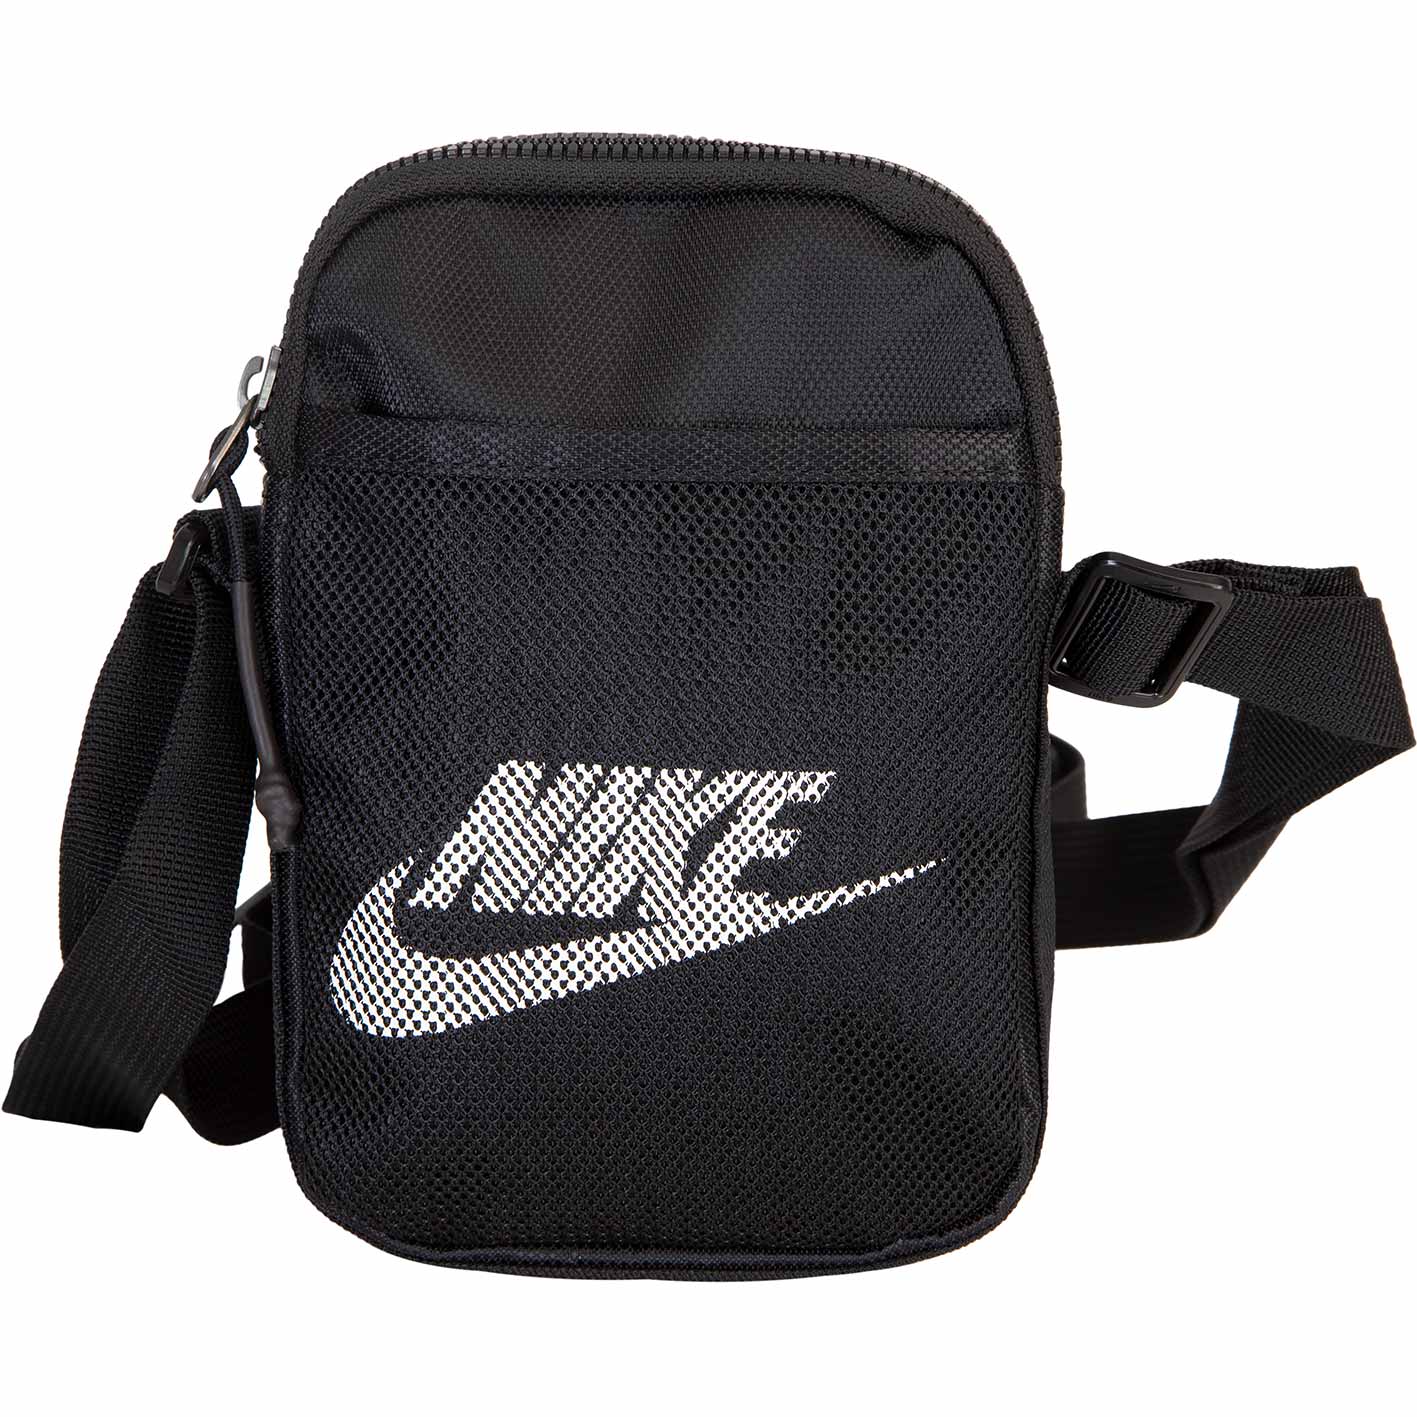 ☆ Nike Heritage Crossbody Mini Bag Umhängetasche schwarz - hier bestellen!